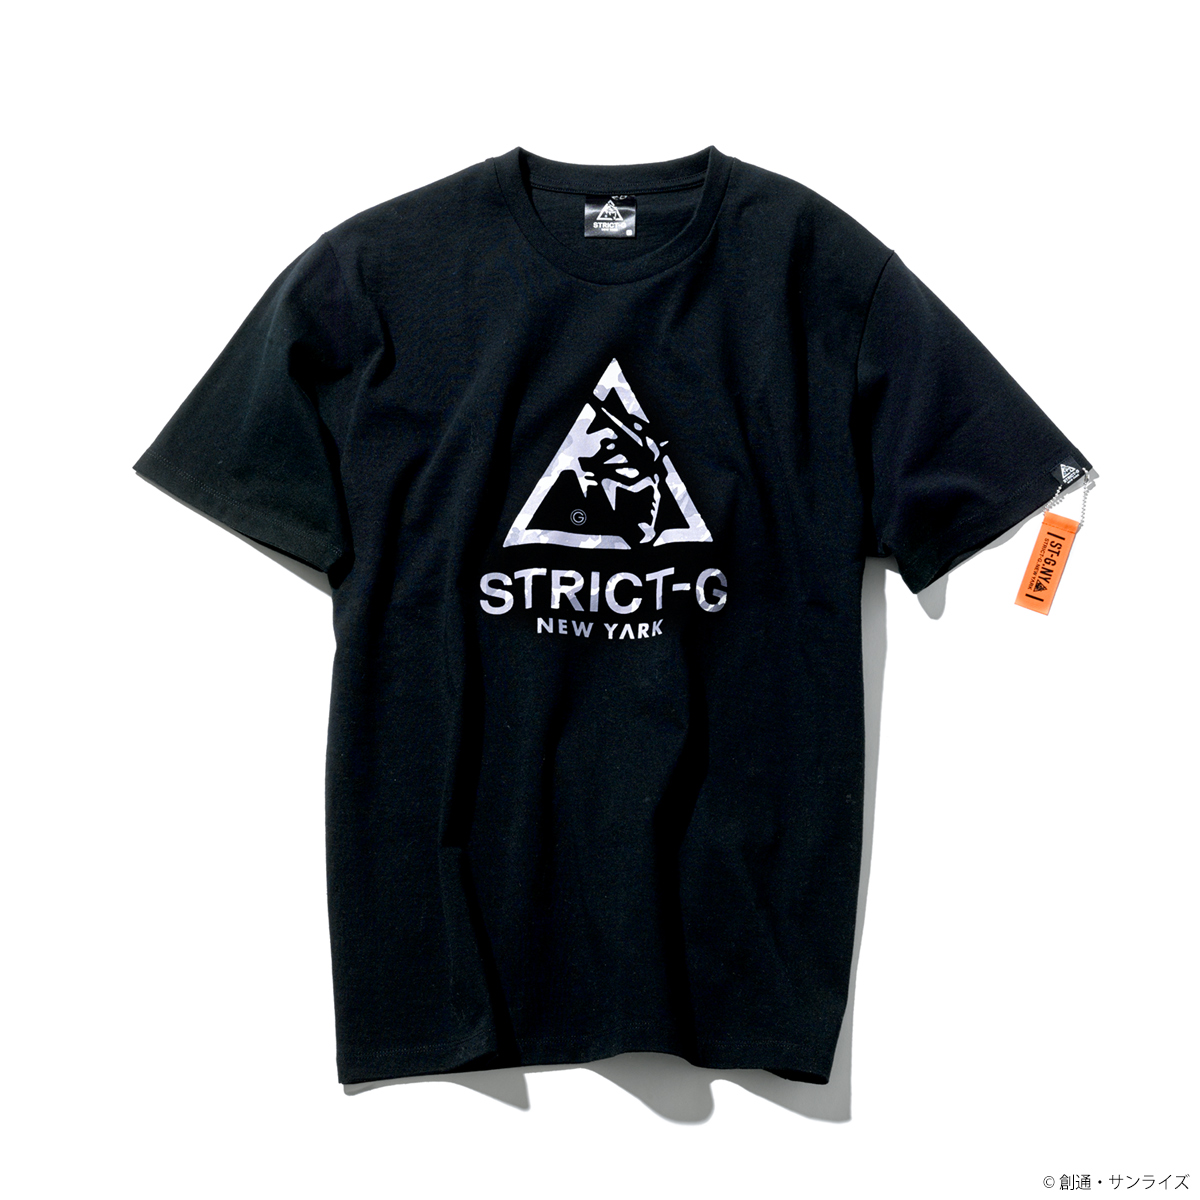 STRICT-G NEW YARK Tシャツ Camouflage Logo